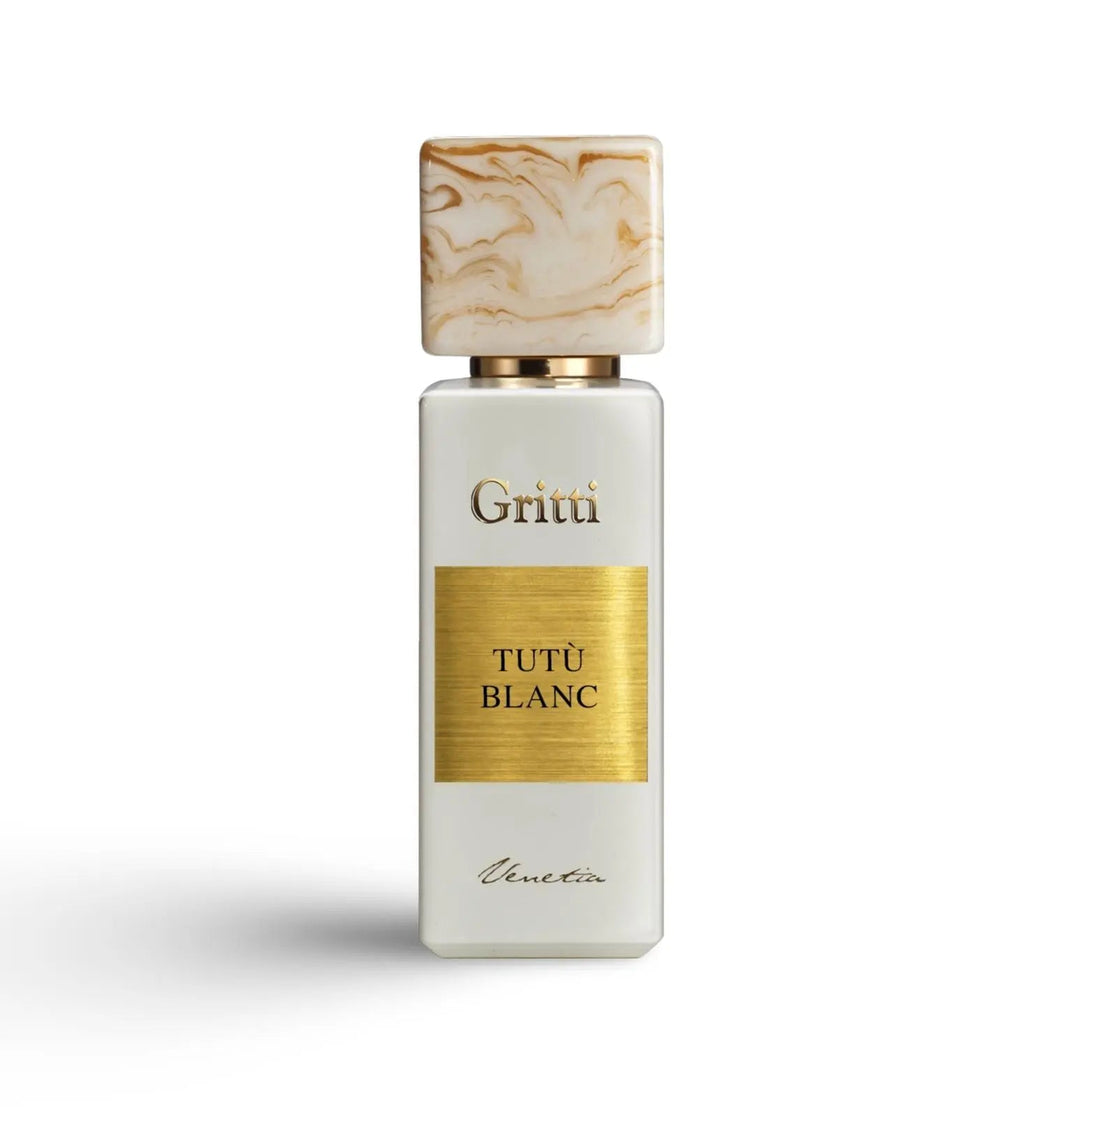 Tutù Blanc Gritti парфюмированная вода 100 мл